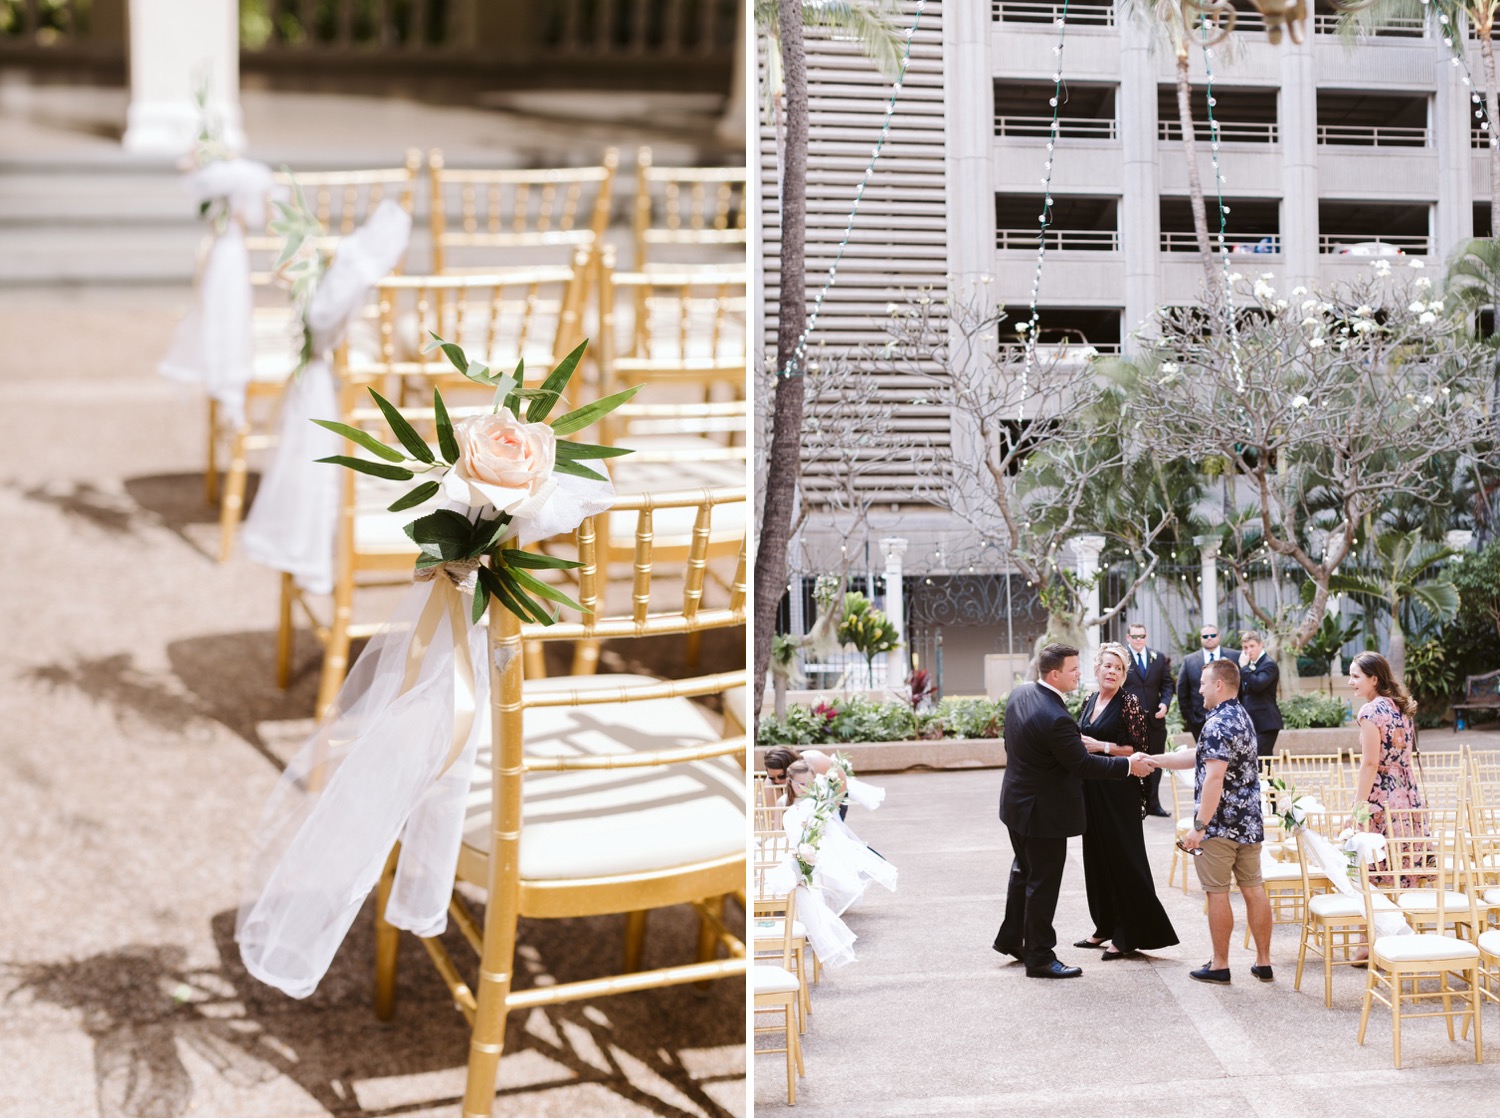 47_Julia_Hawaii_Guests_Greeting_Ceremony_Honolulu_decor_Cafe_Chair_Groom_Wedding.jpg